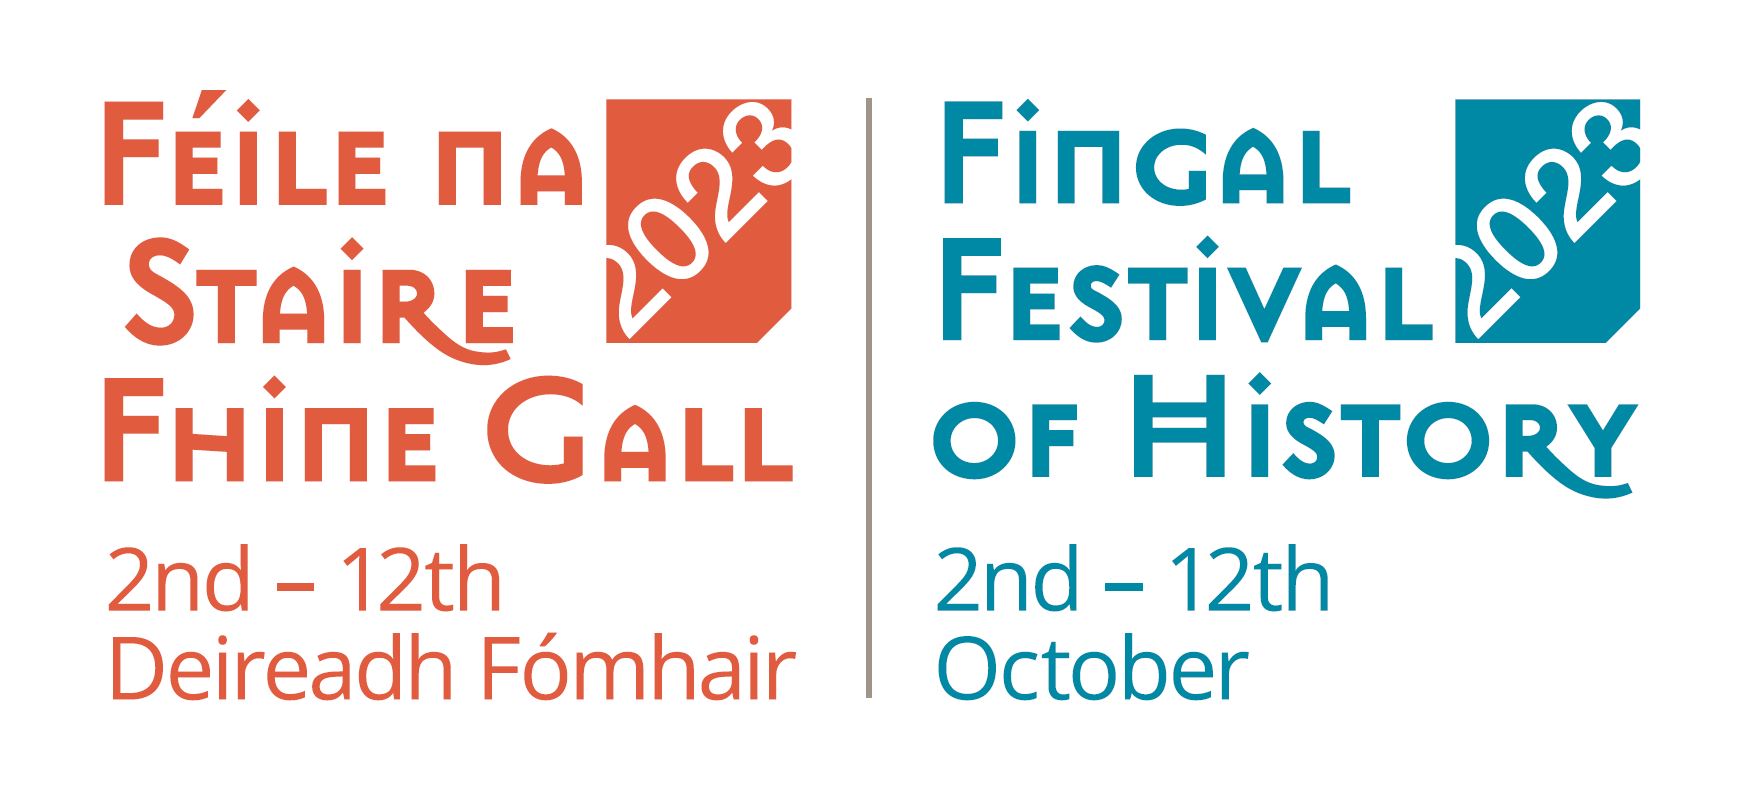 fingal festival on history